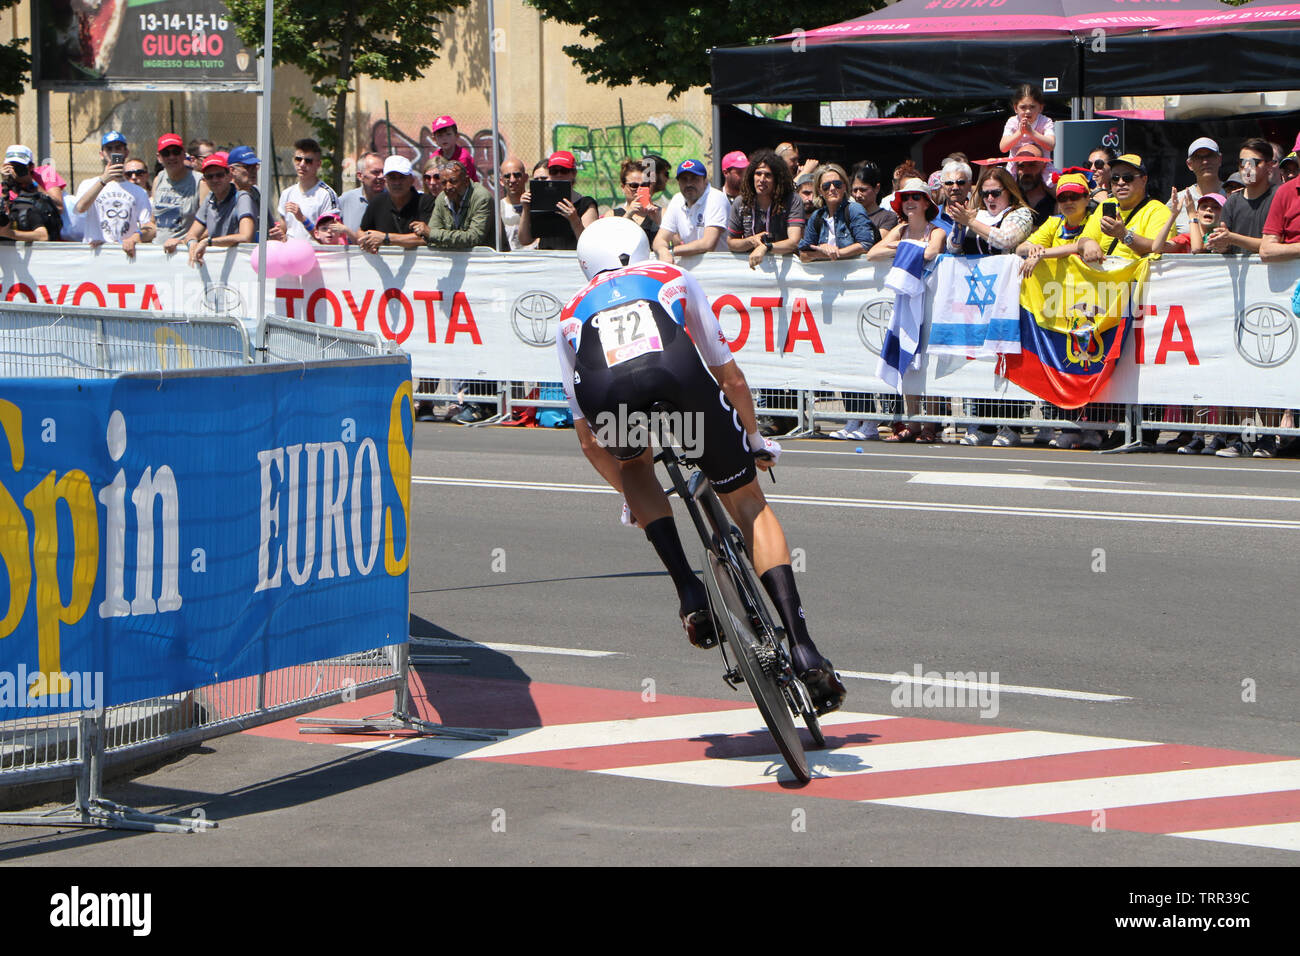 Pro Radfahrer konkurrieren in einem Zeitfahren in der letzten Etappe des Giro d'Italia 2019 in Verona, Italien Stockfoto